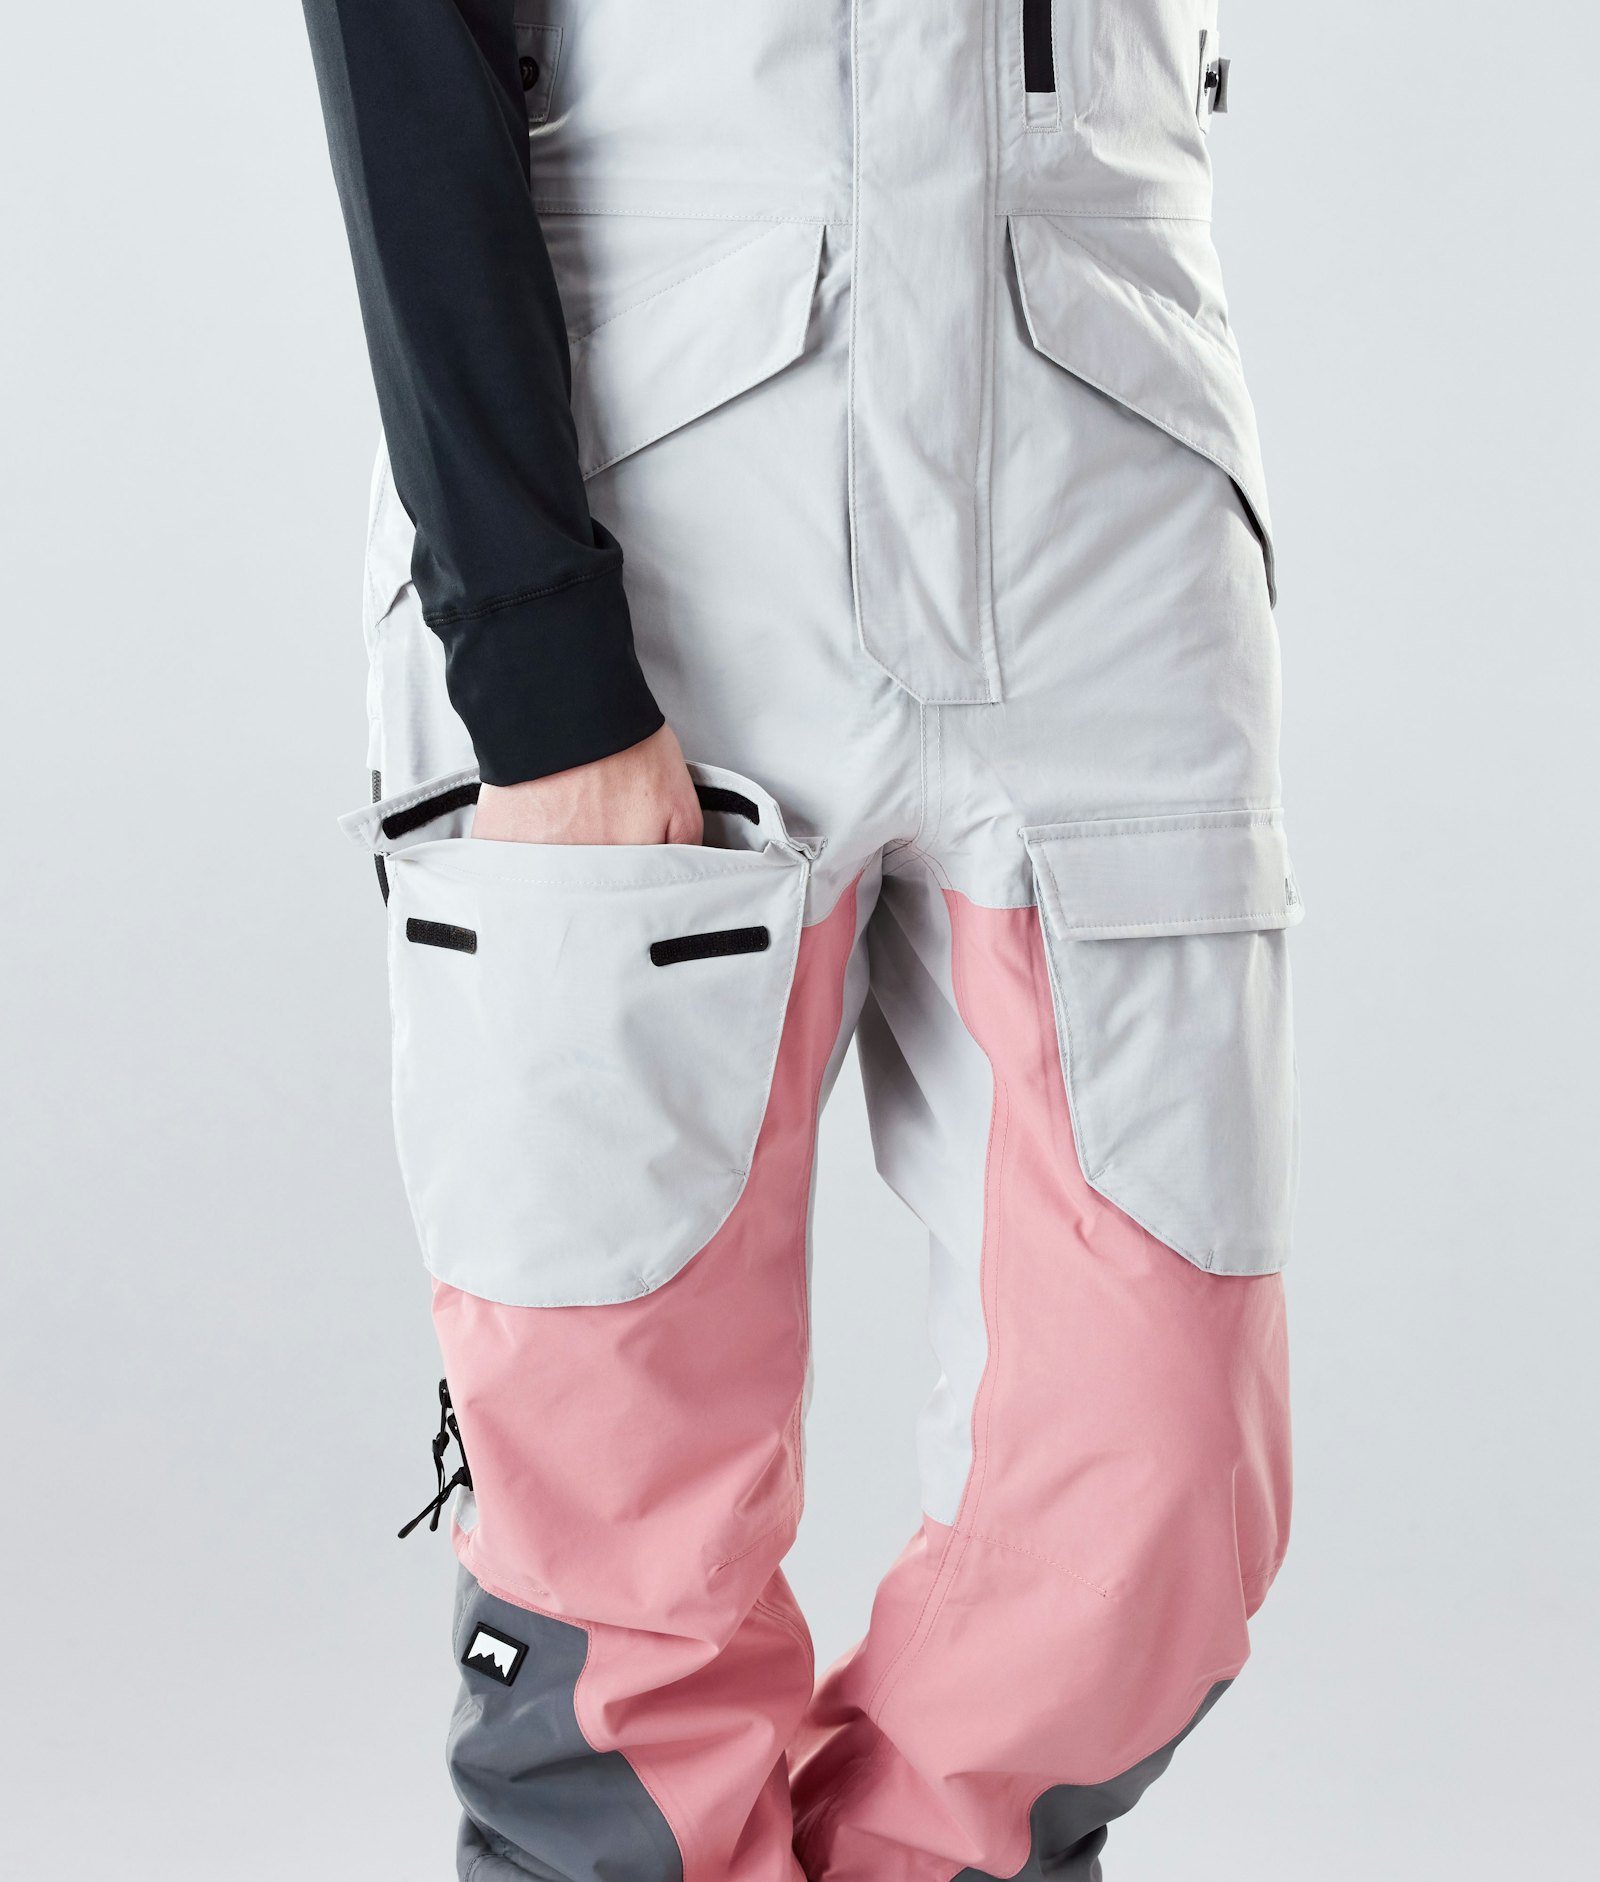 Montec Fawk W 2020 Skihose Damen Light Grey/Pink/Light Pearl